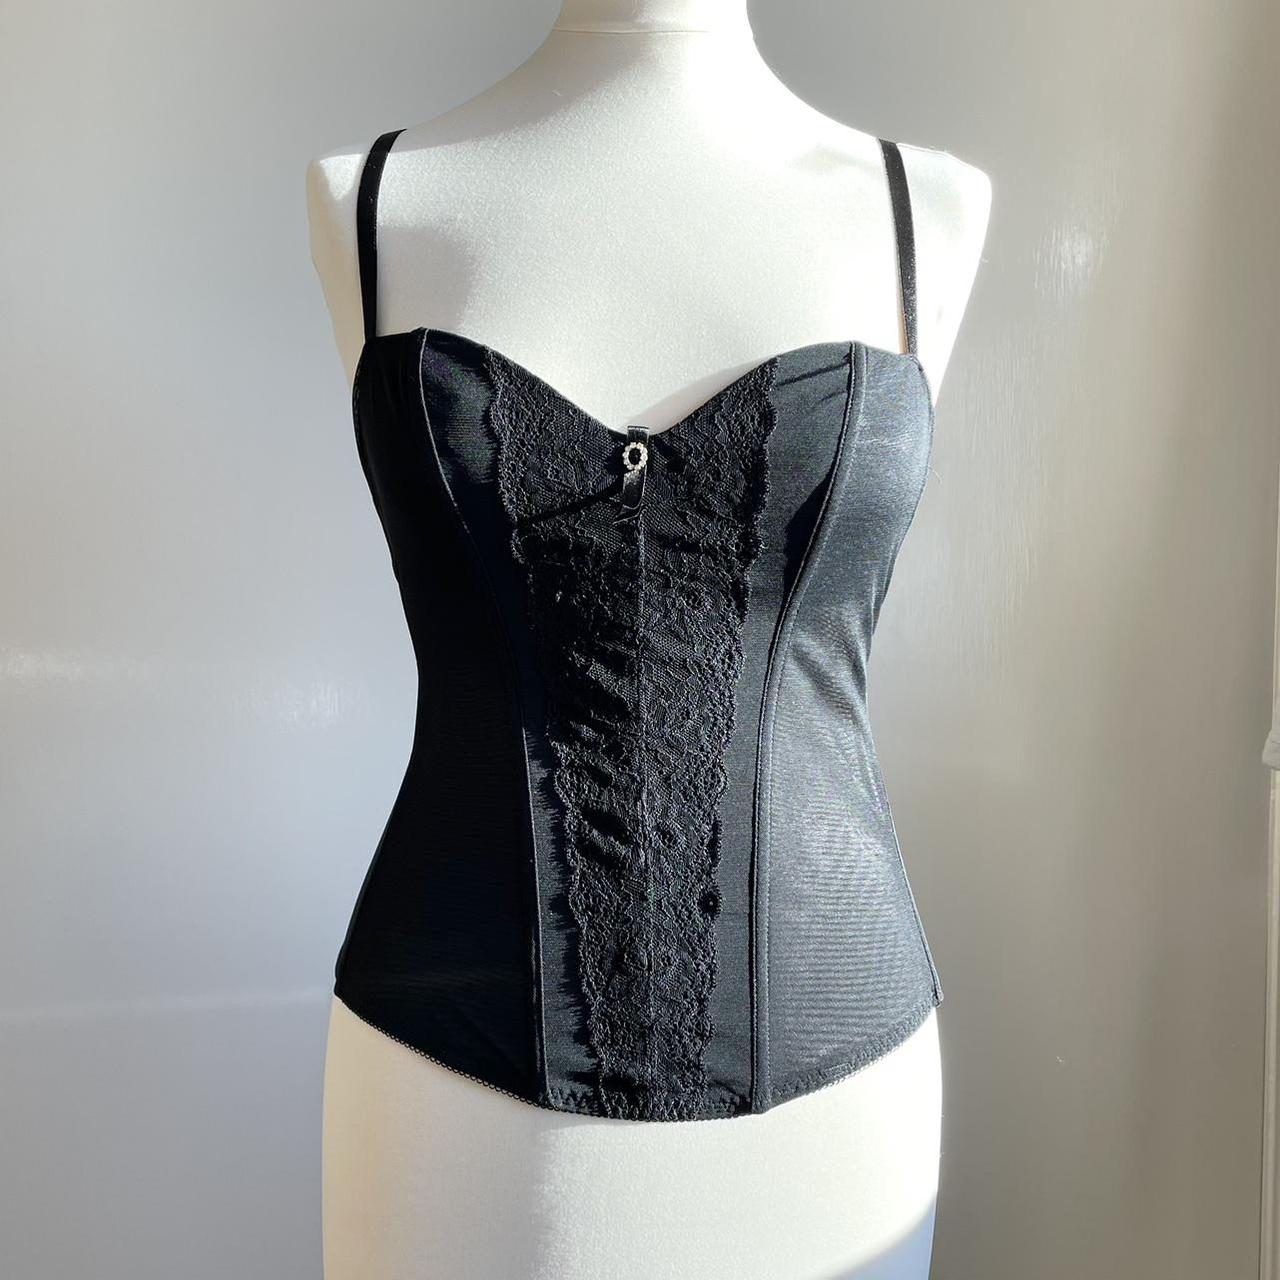 Ann Summers Black corset top Lace detail up the... - Depop